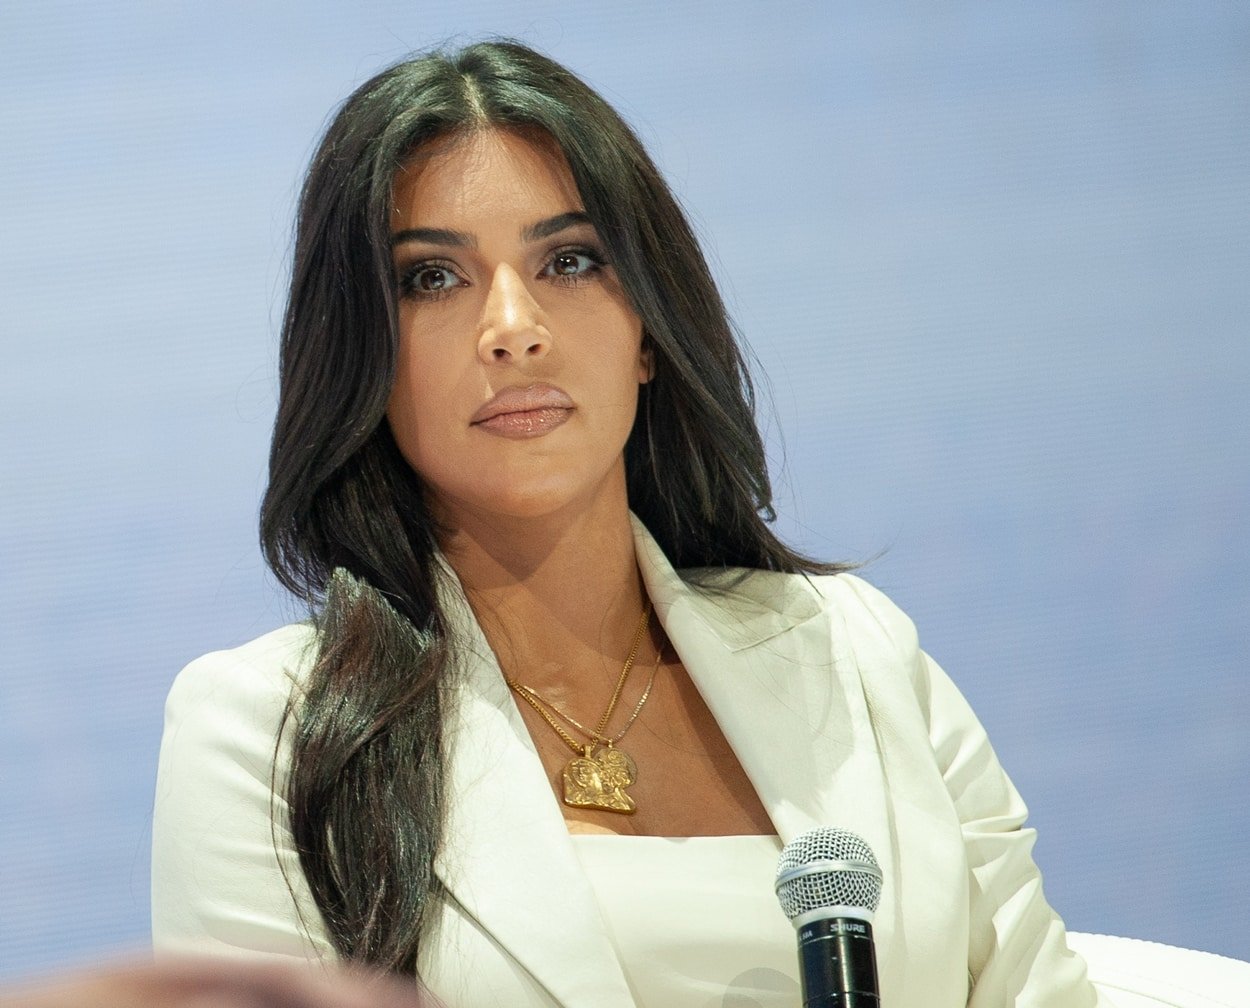 Kim Kardashian denies being snubbed by the British royals